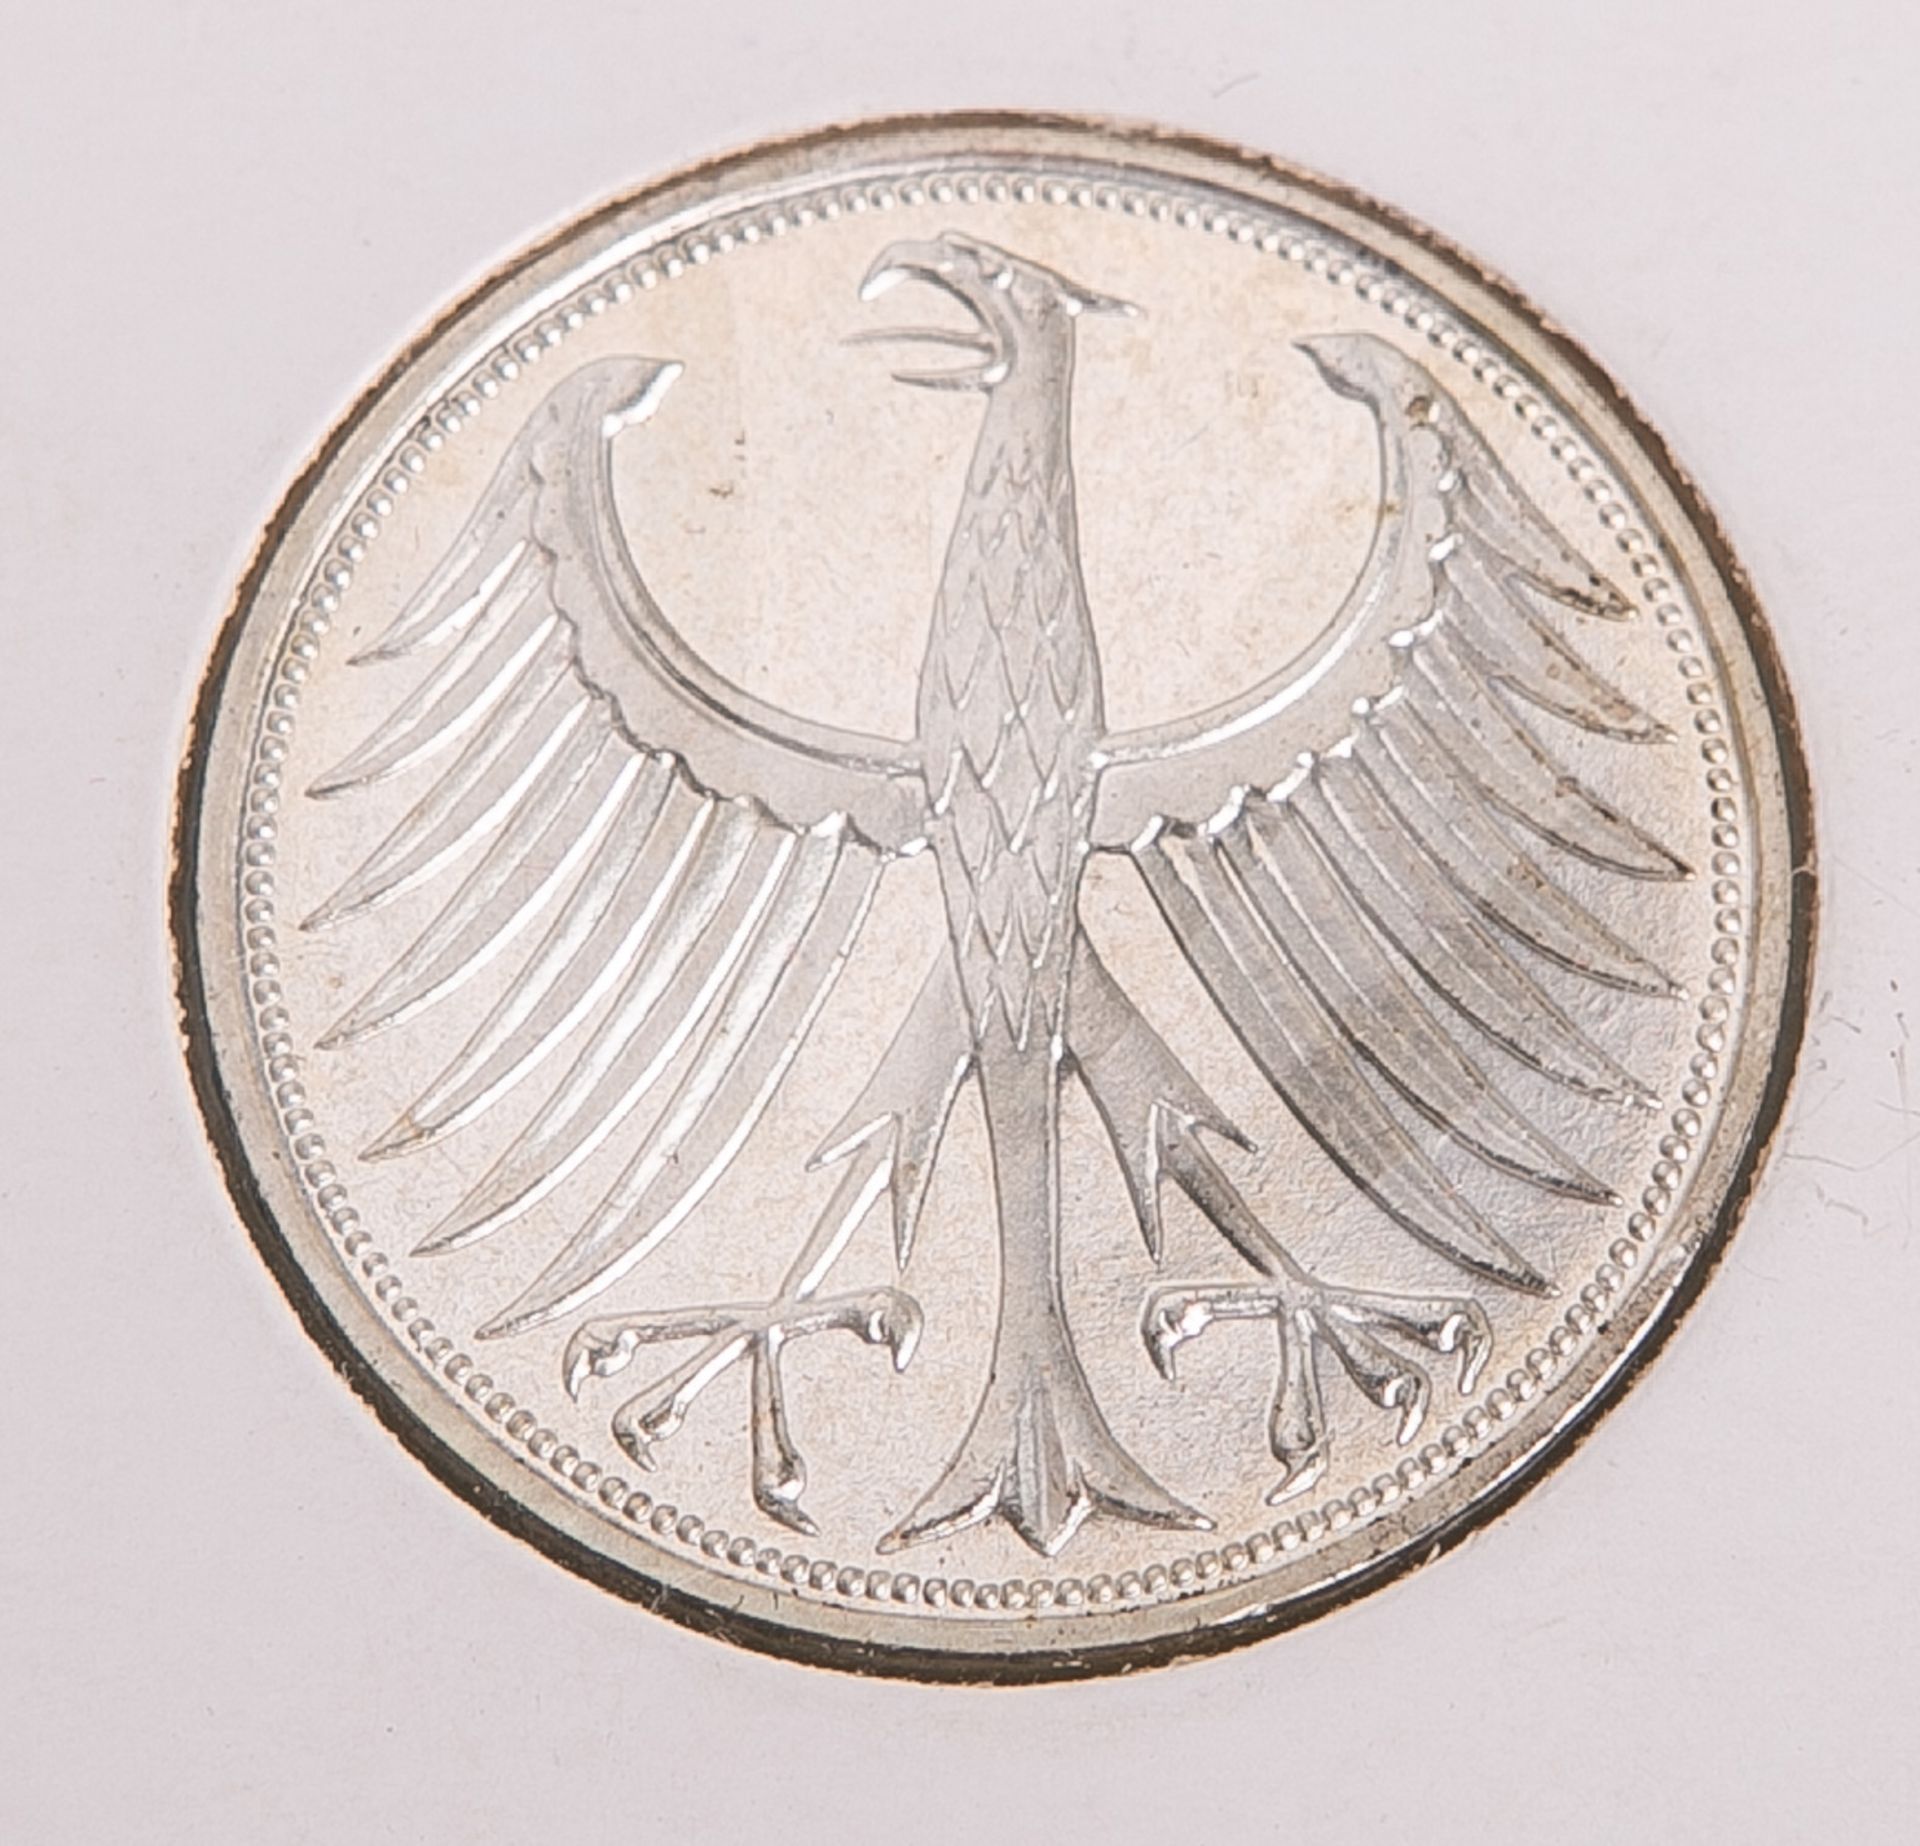 5 DM-Münze "Silberadler" (BRD, 1968), Münzprägestätte: J, eingeschweißt. PP. - Image 2 of 2